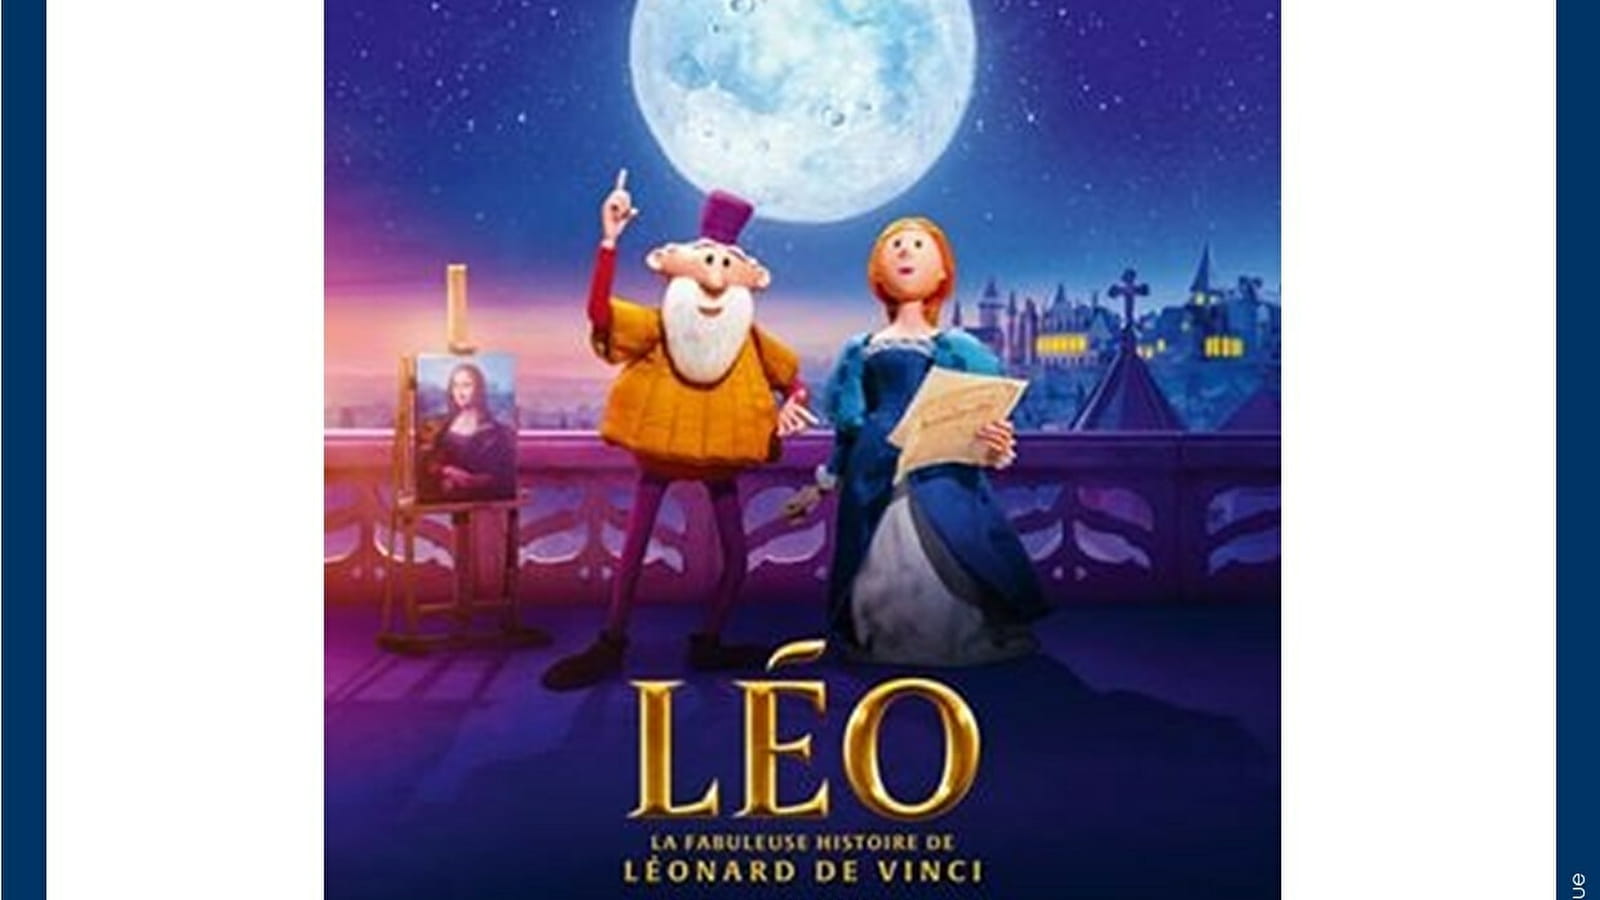 Séance cinéma 'Léo, la fabuleuse histoire de Léonard de Vinci'